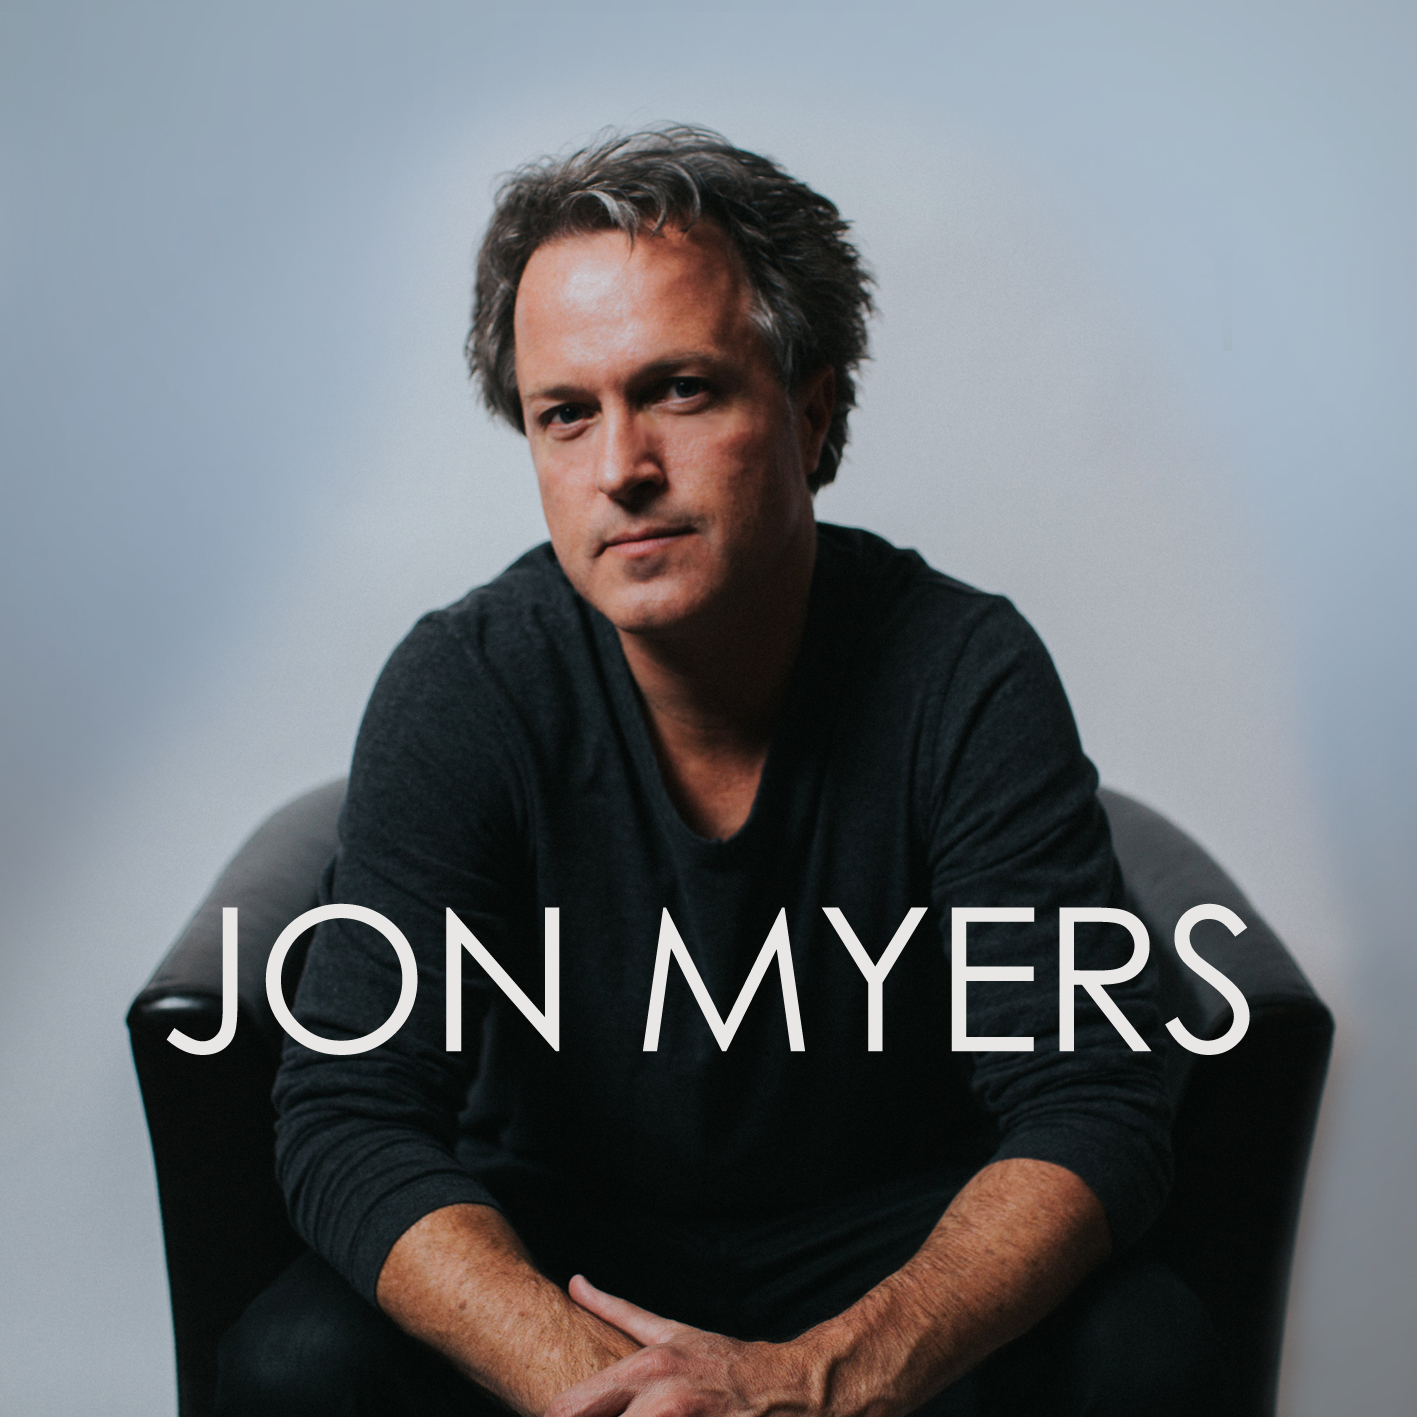 Jon Myers